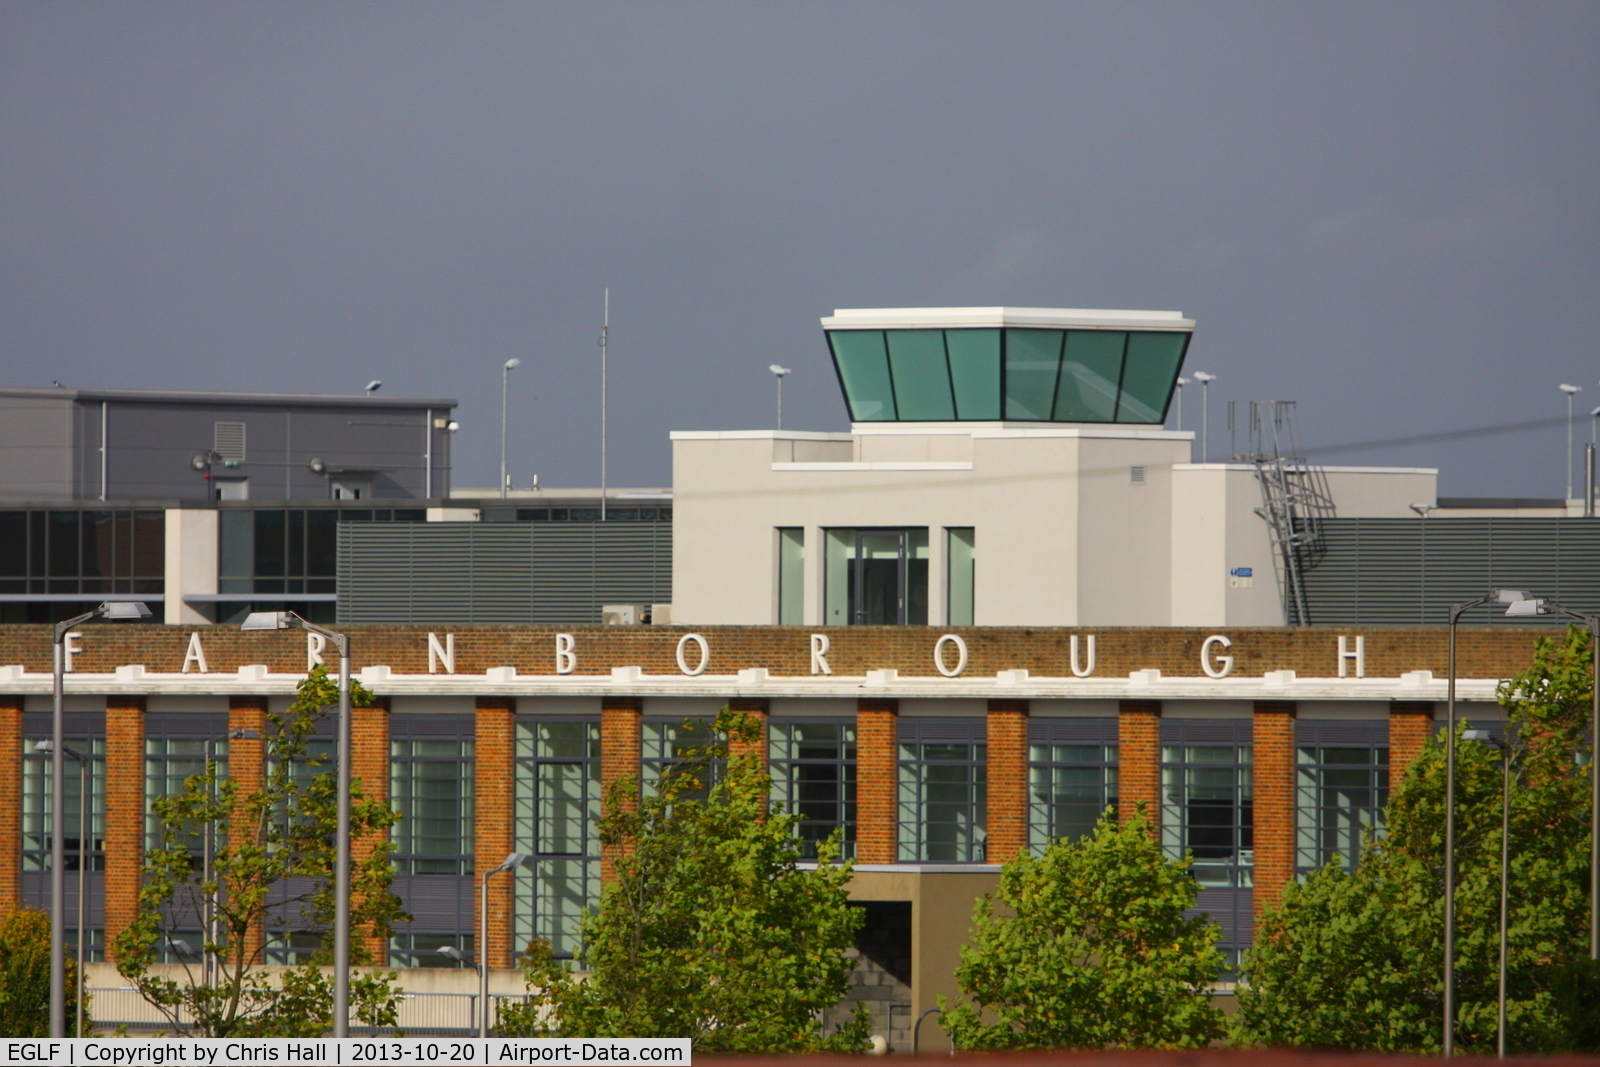 Farnborough Airfield Airport, Farnborough, England United Kingdom (EGLF) - the former Farnborough Airport terminal and Tower, now part of the Farnborough Business Park